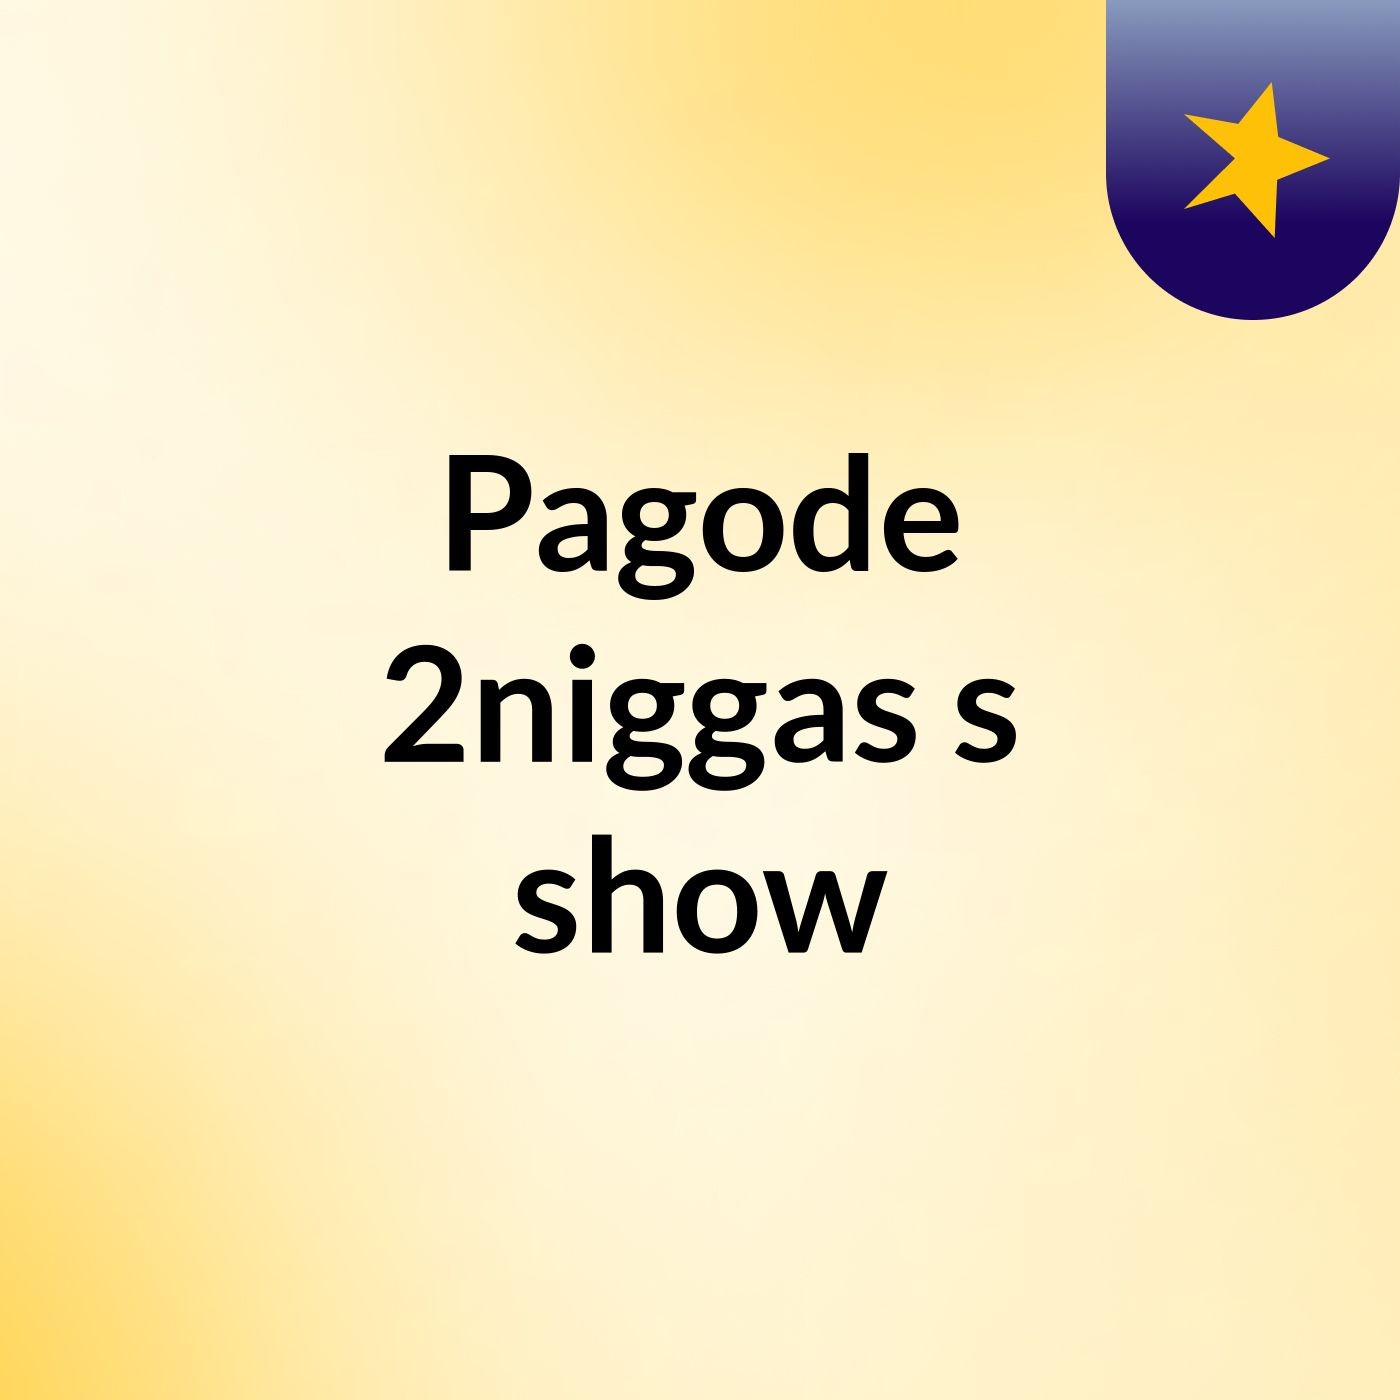 Pagode 2niggas's show